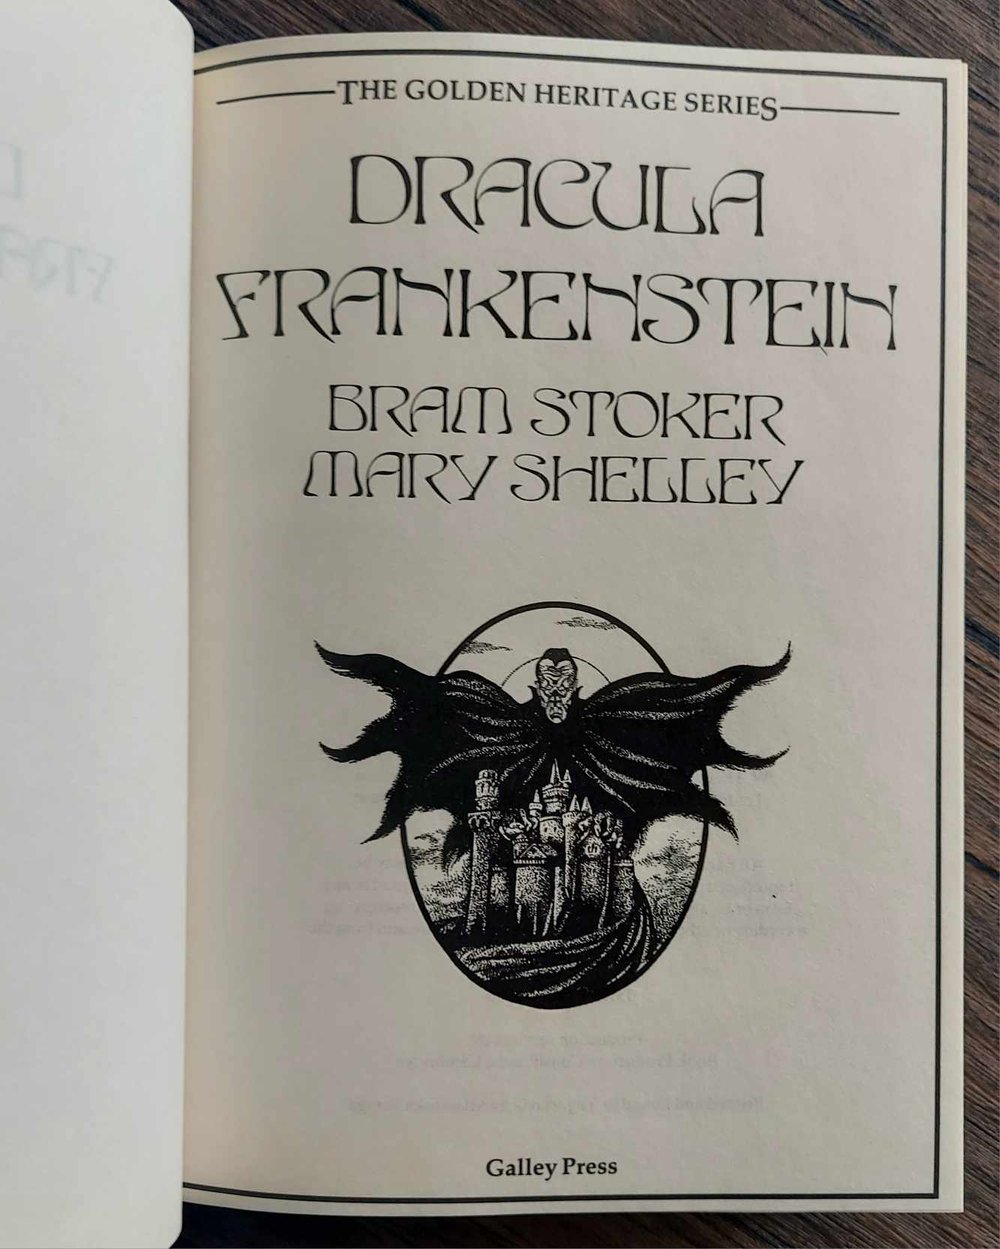 Dracula / Frankenstein, by Bram Stoker & Mary Shelley